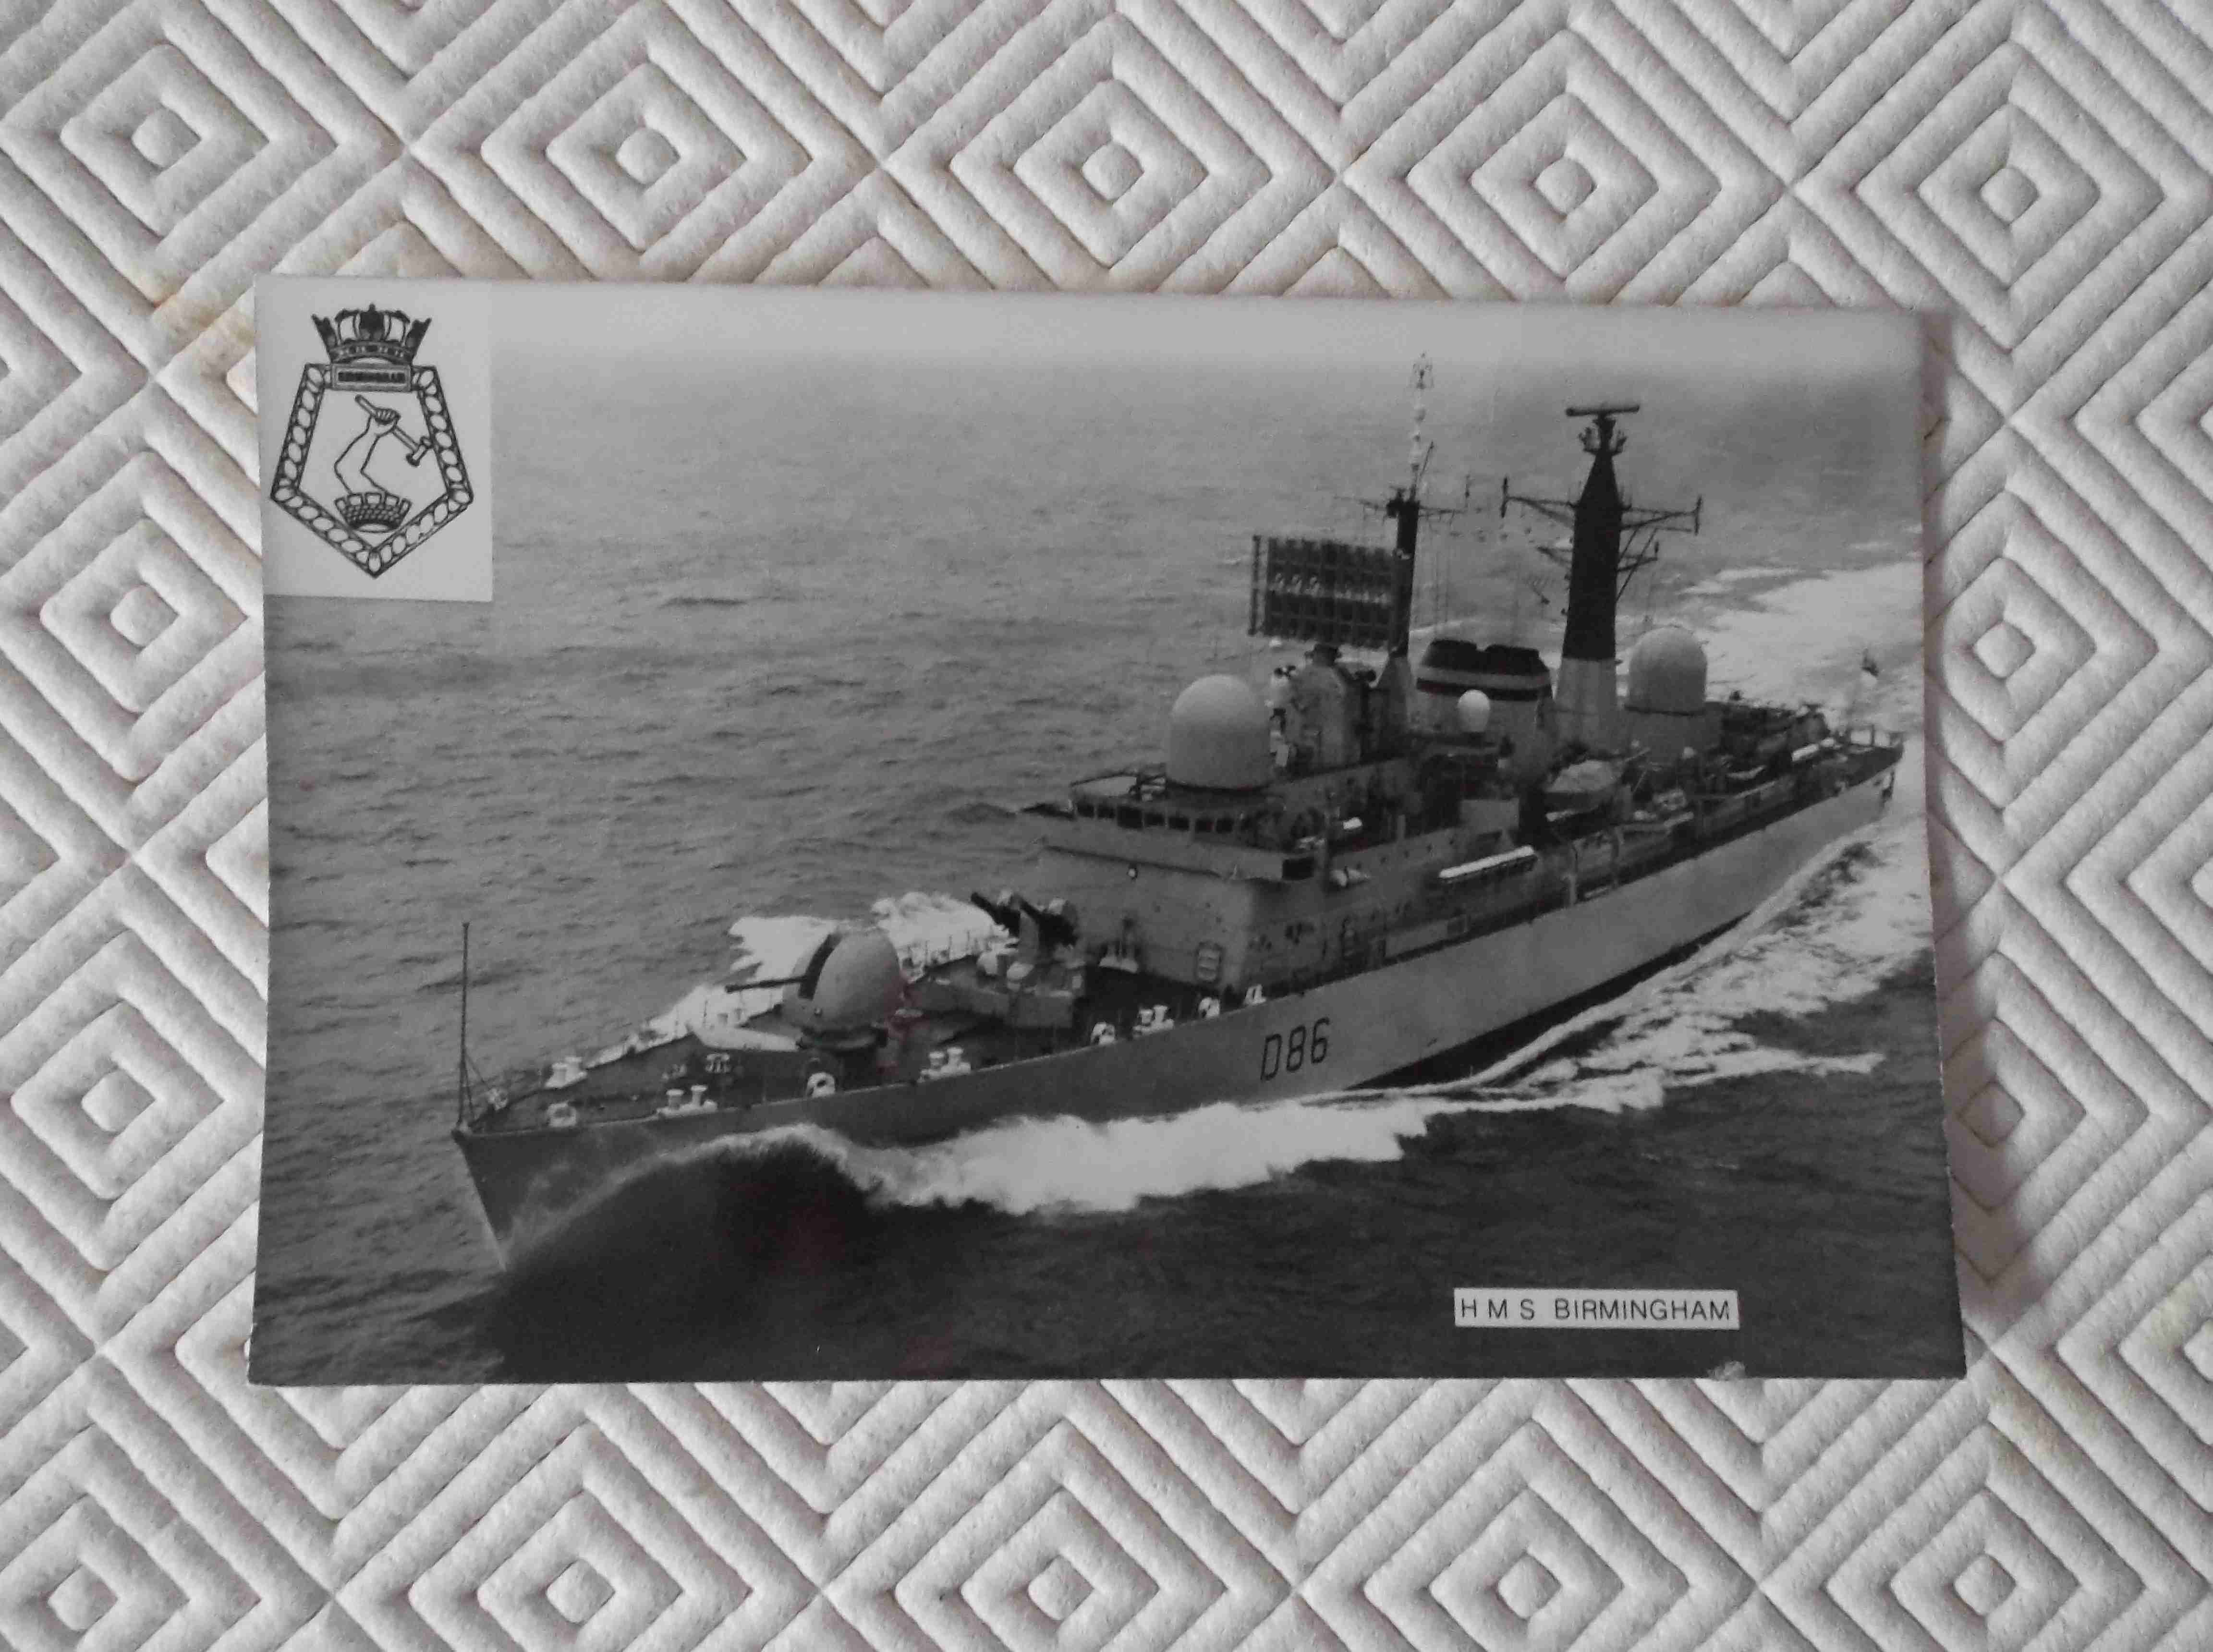 POSTCARD SIZE PHOTOGRAPH OF THE ROYAL NAVAL VESSEL HMS BIRMINGHAM